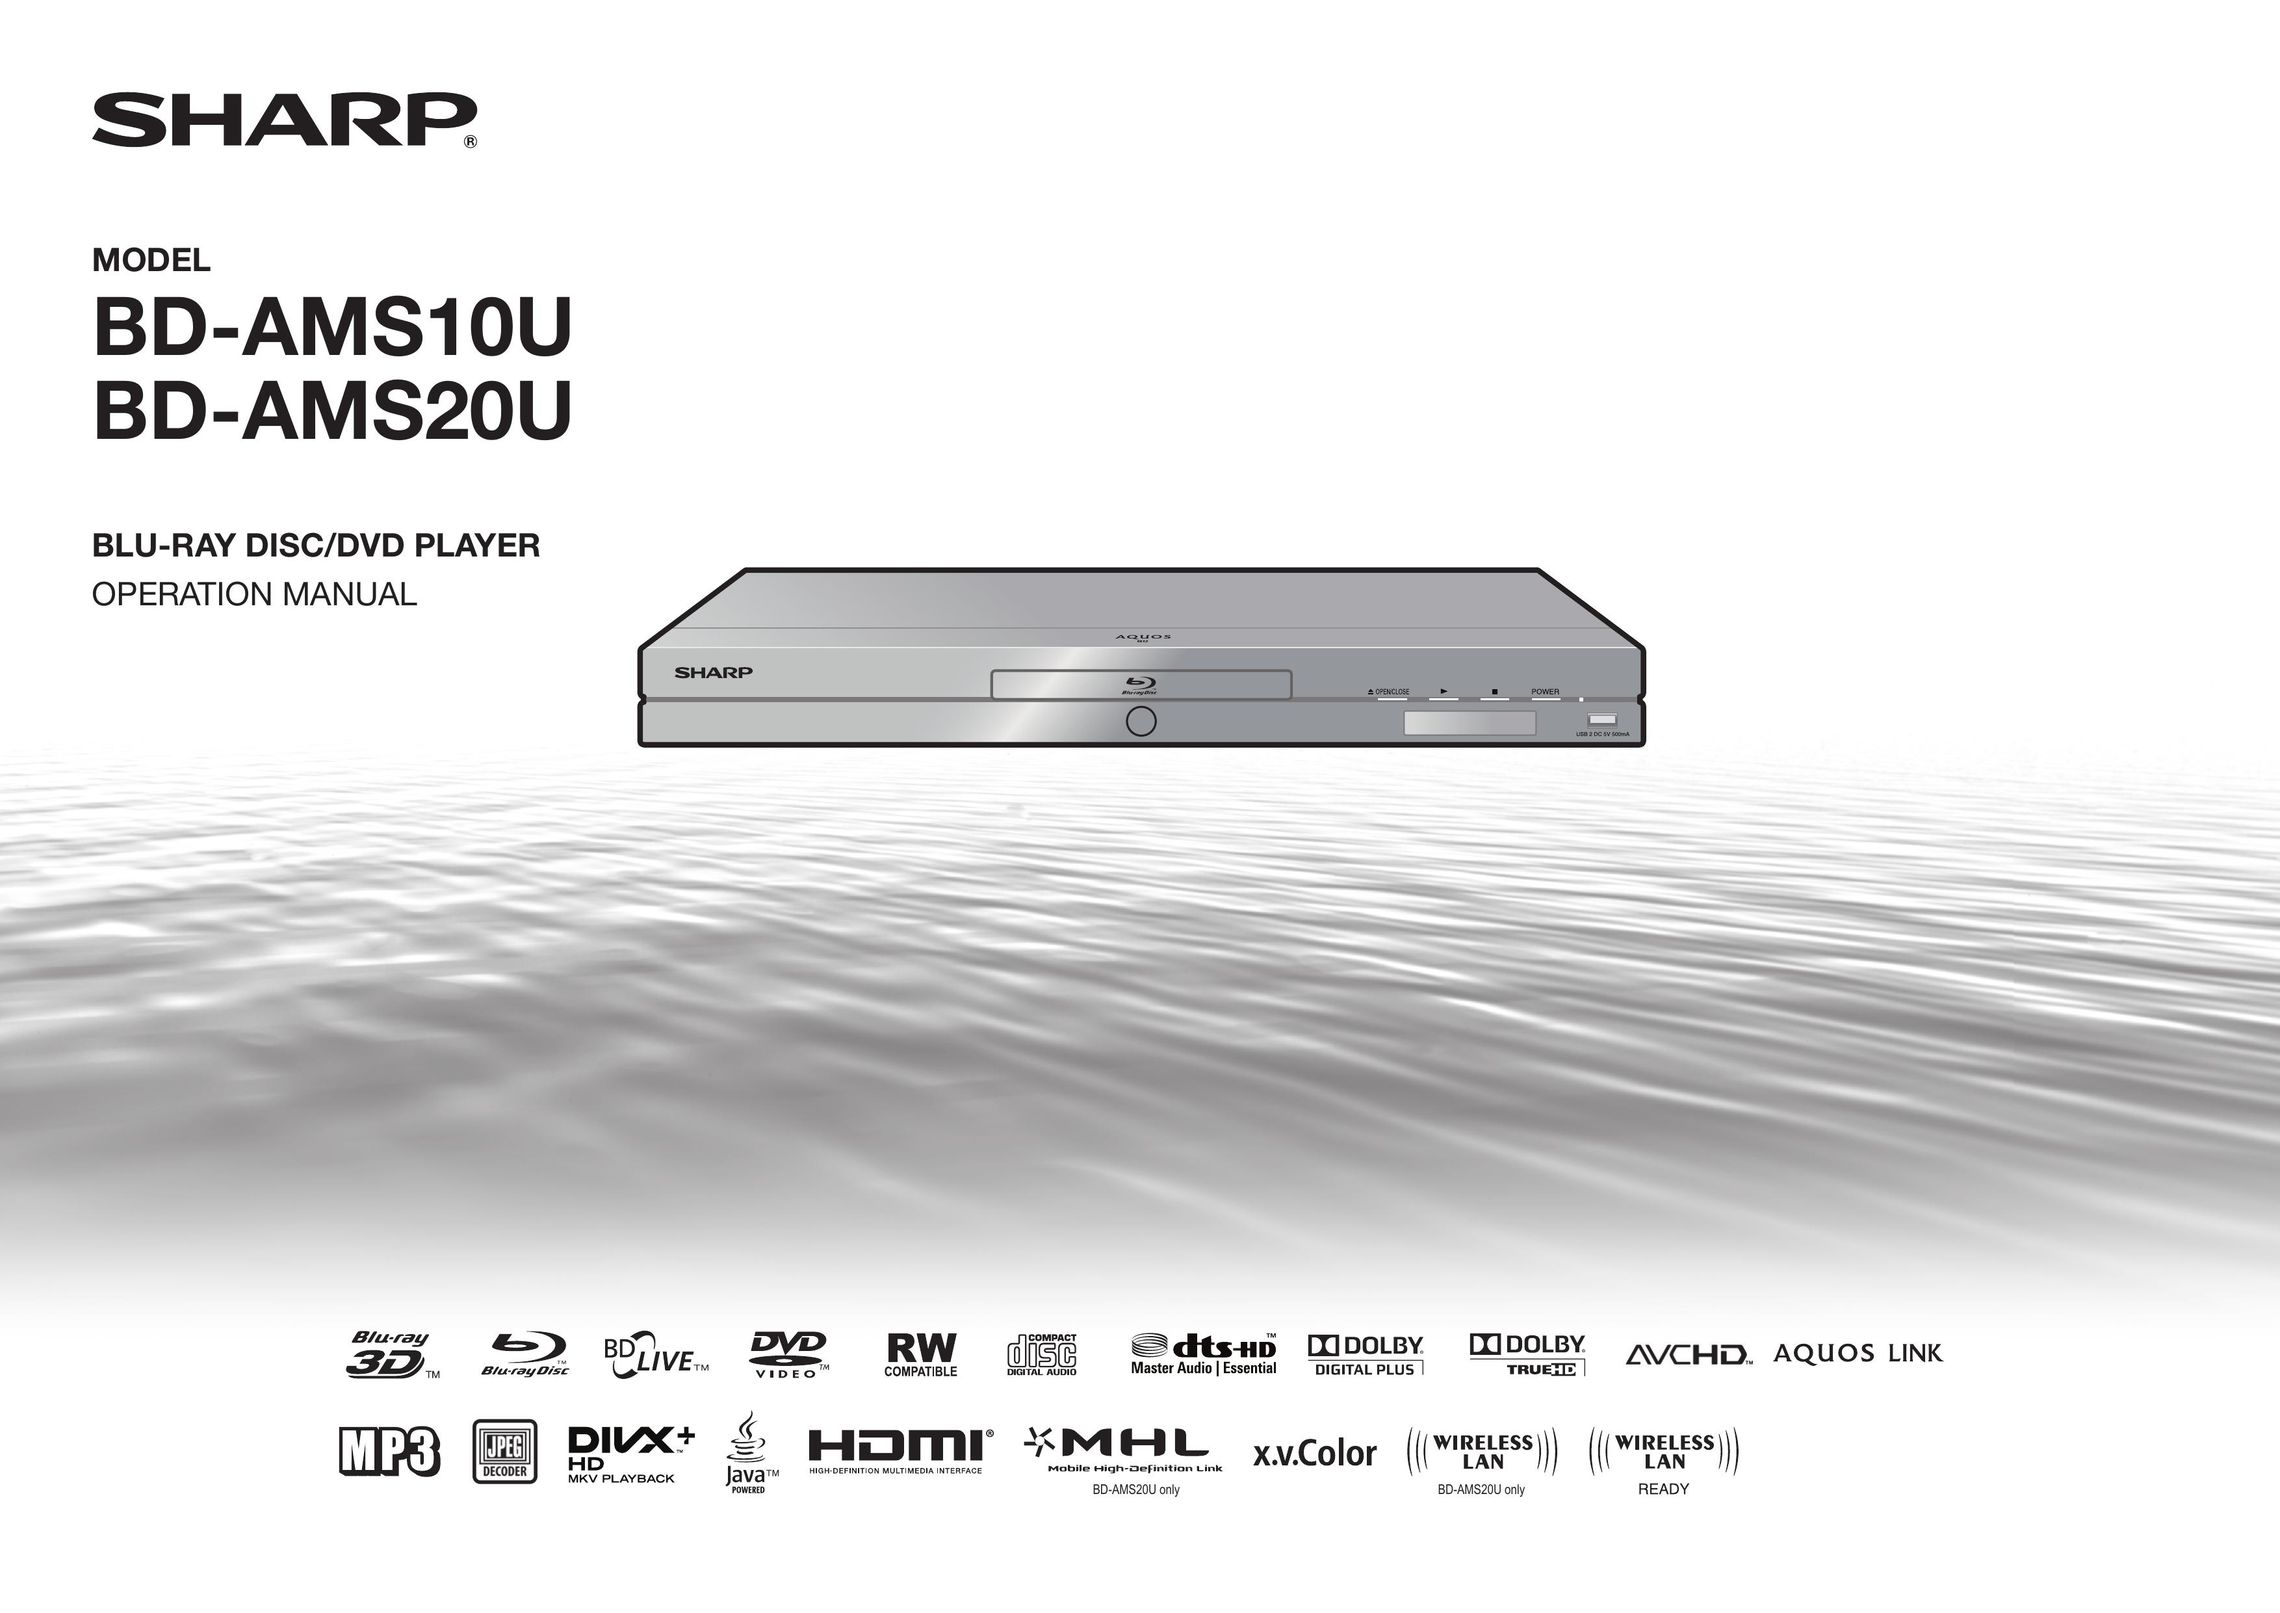 Sharp BD-AMS20U Blu-ray Player User Manual